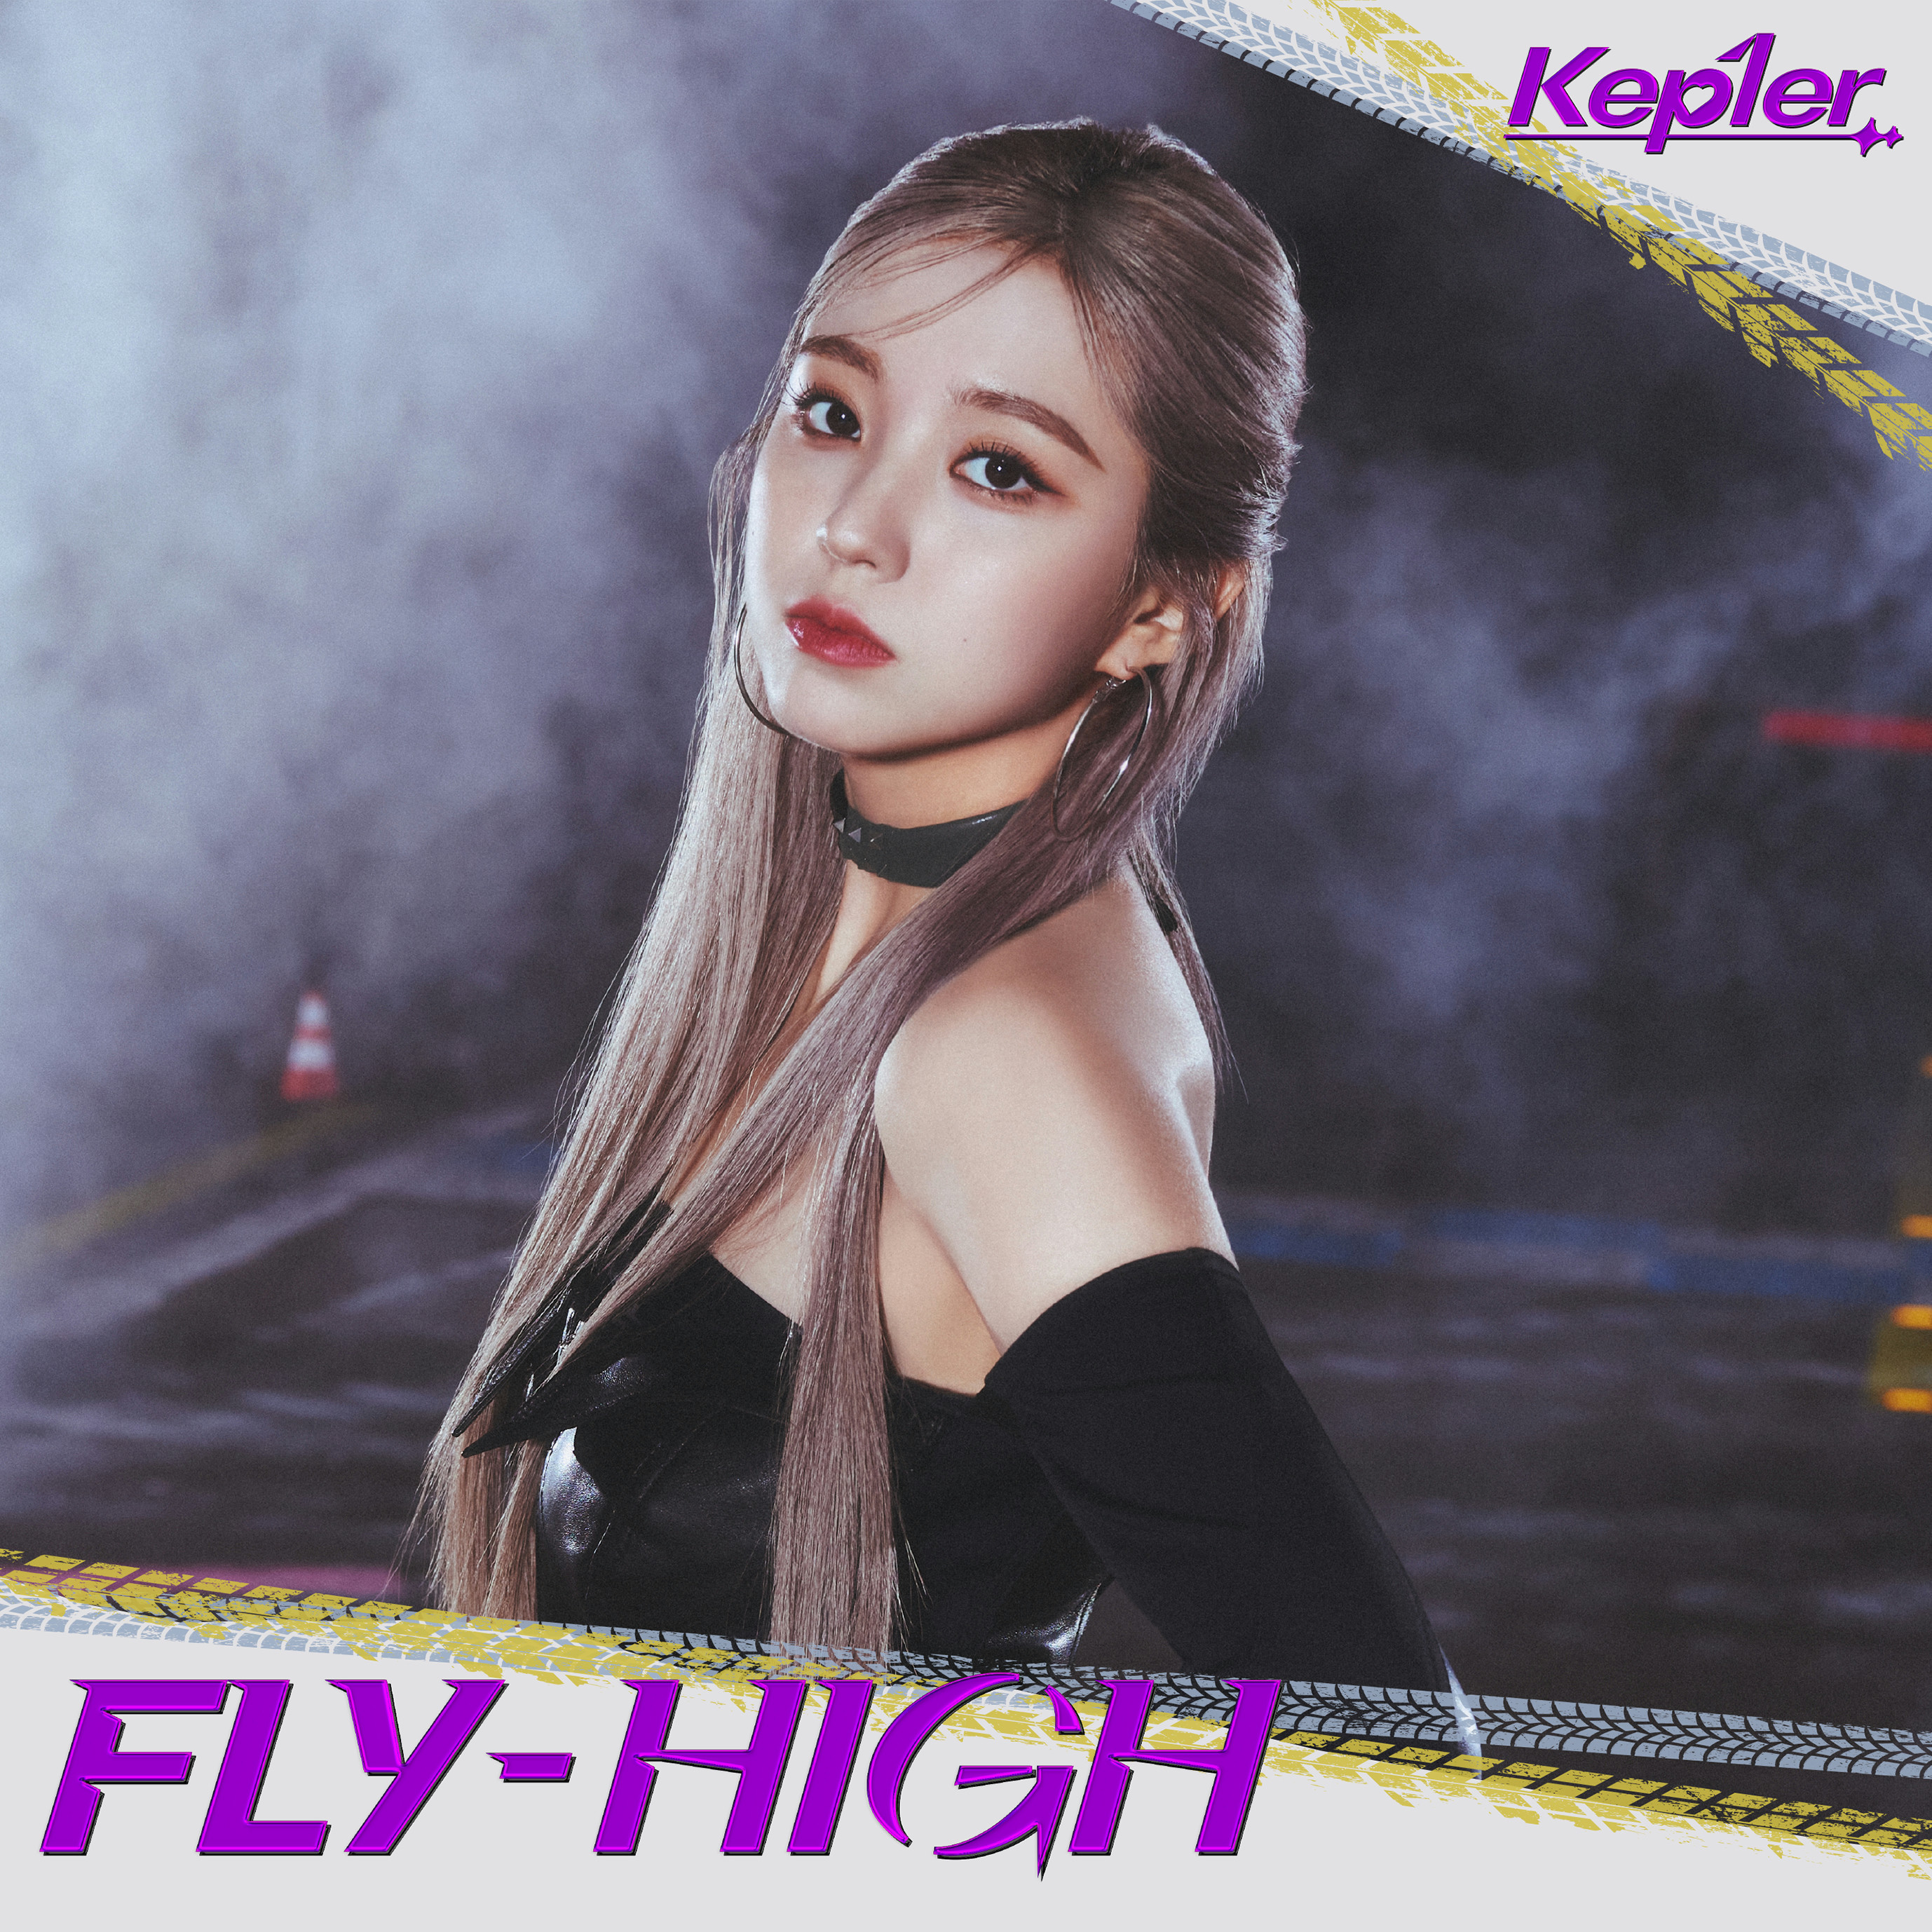 FLY-HIGH>【Kep1ian盤(MASHIRO ver.)】 - 【Kep1ian Japan】Kep1er